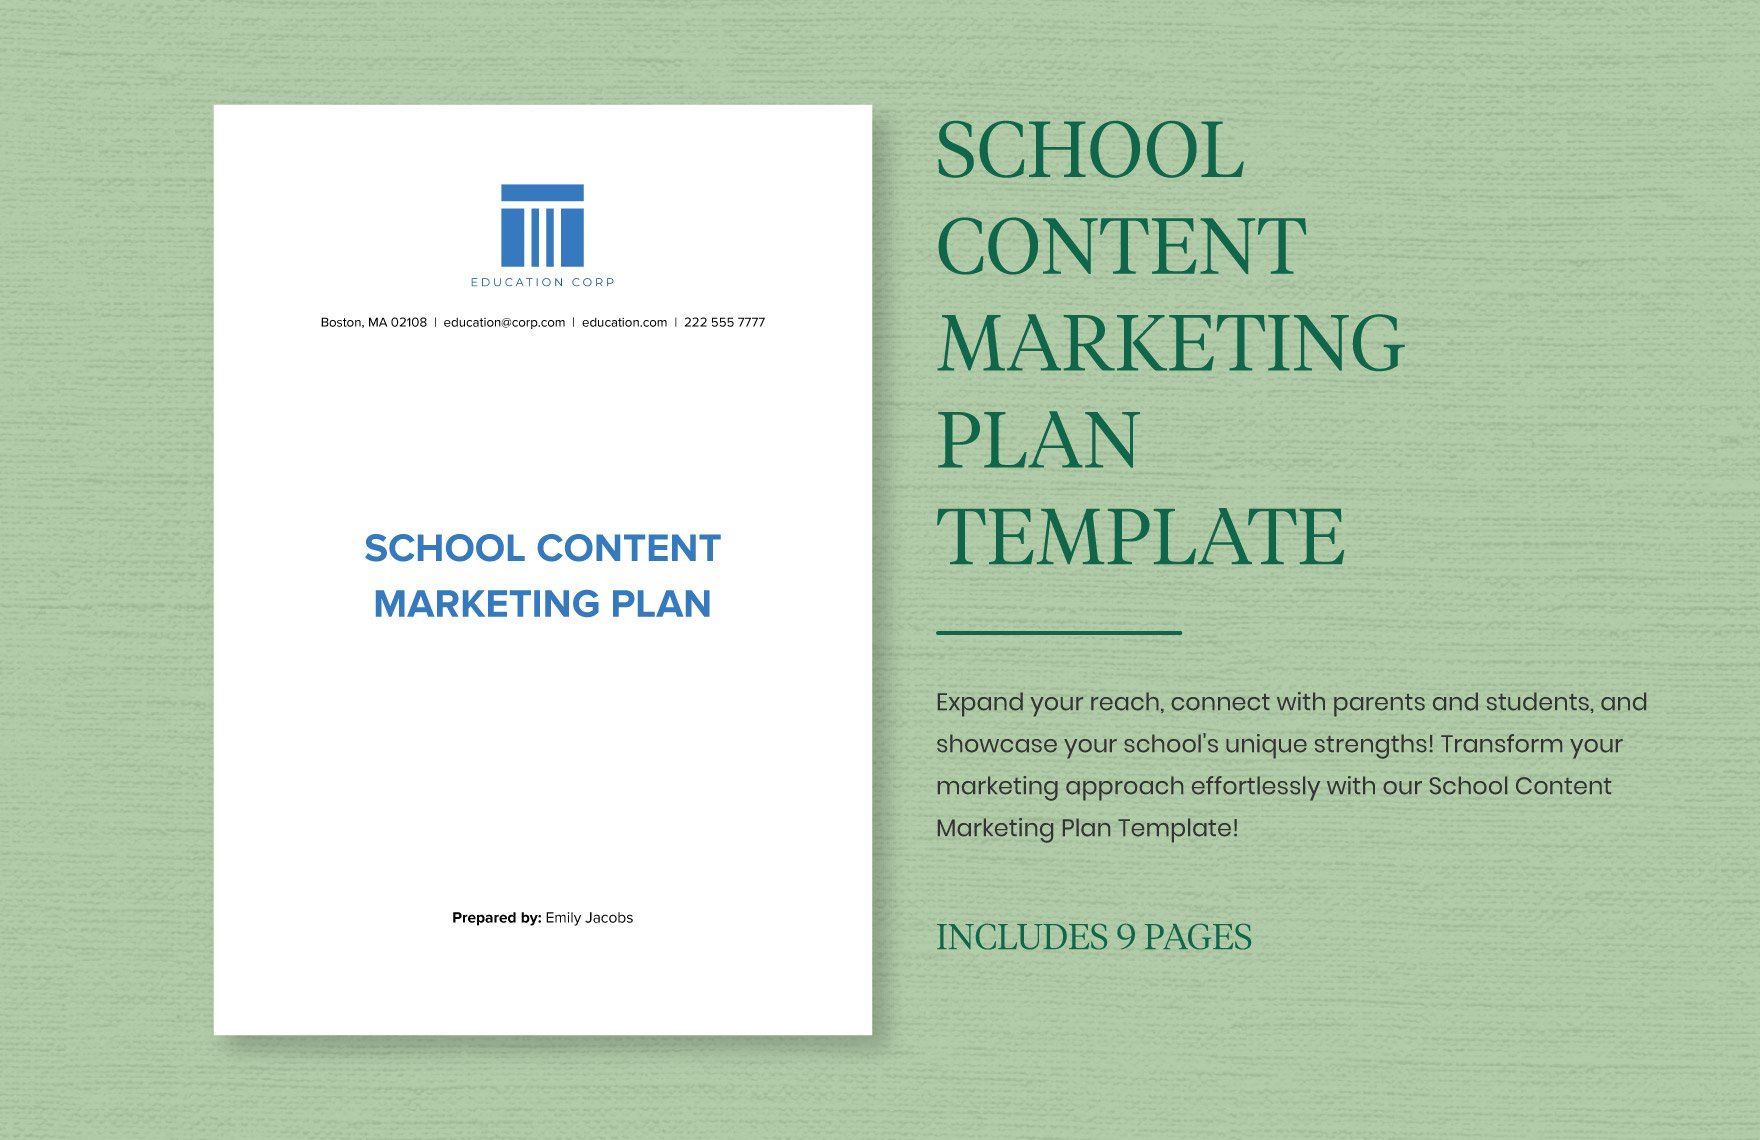 School Content Marketing Plan Template